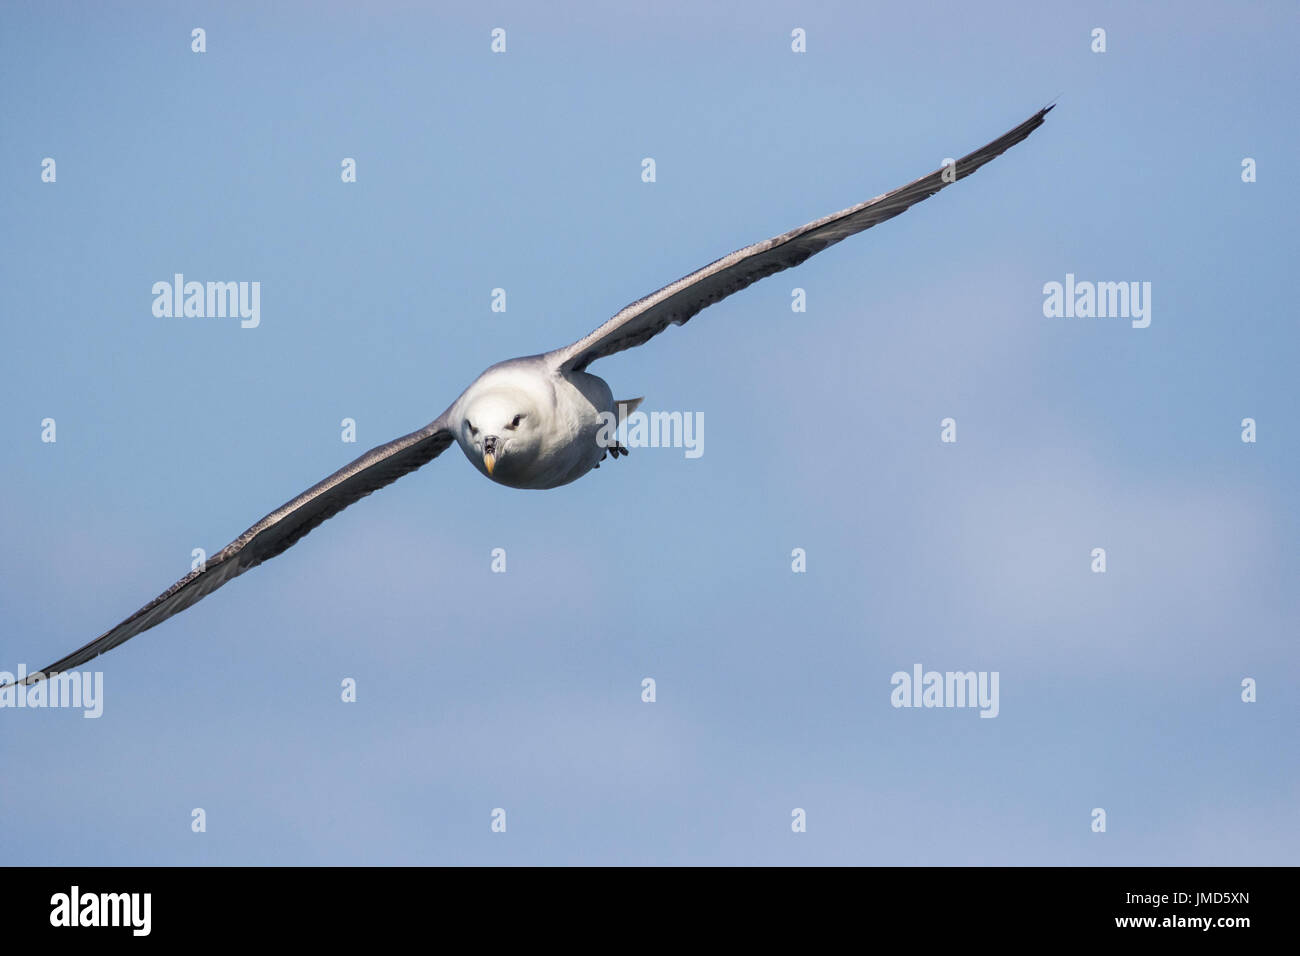 Fulmar (Fulmarus glacialis) in flight, flying towards camera against a blue sky Stock Photo